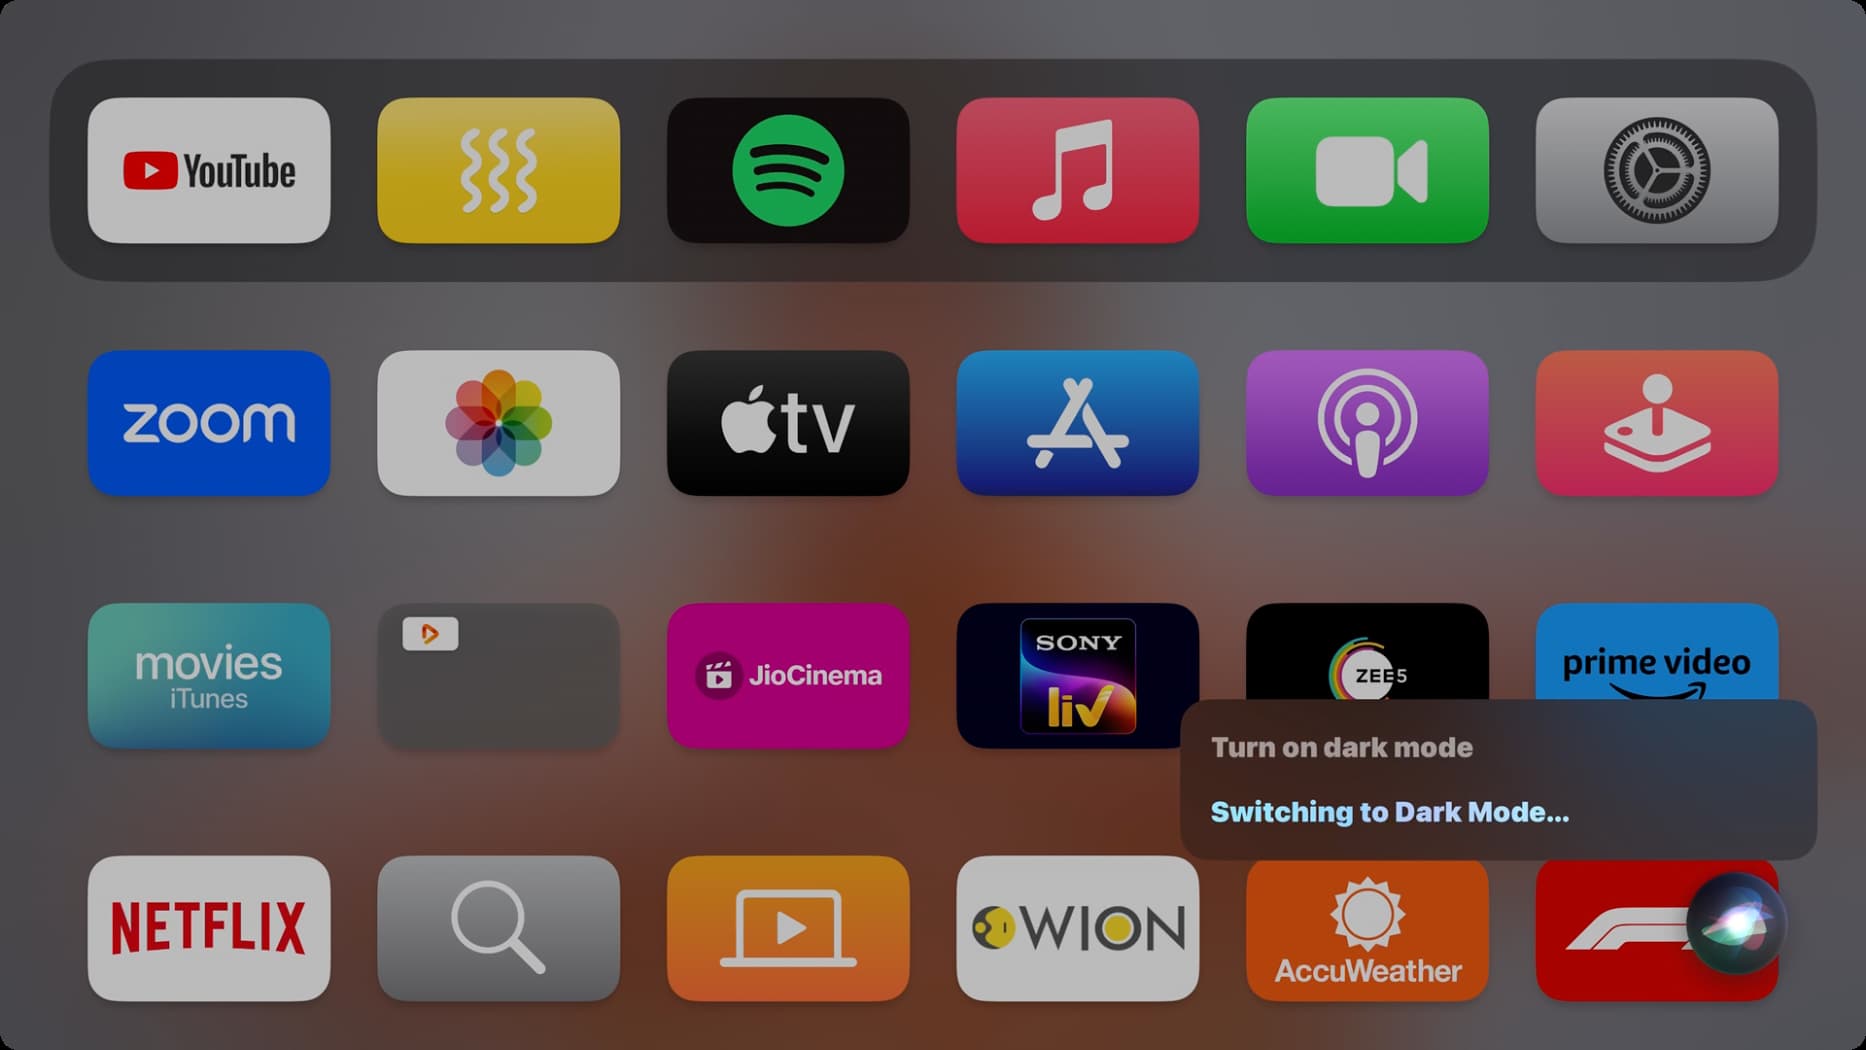 Asking Siri to turn on Dark Mode on Apple TV